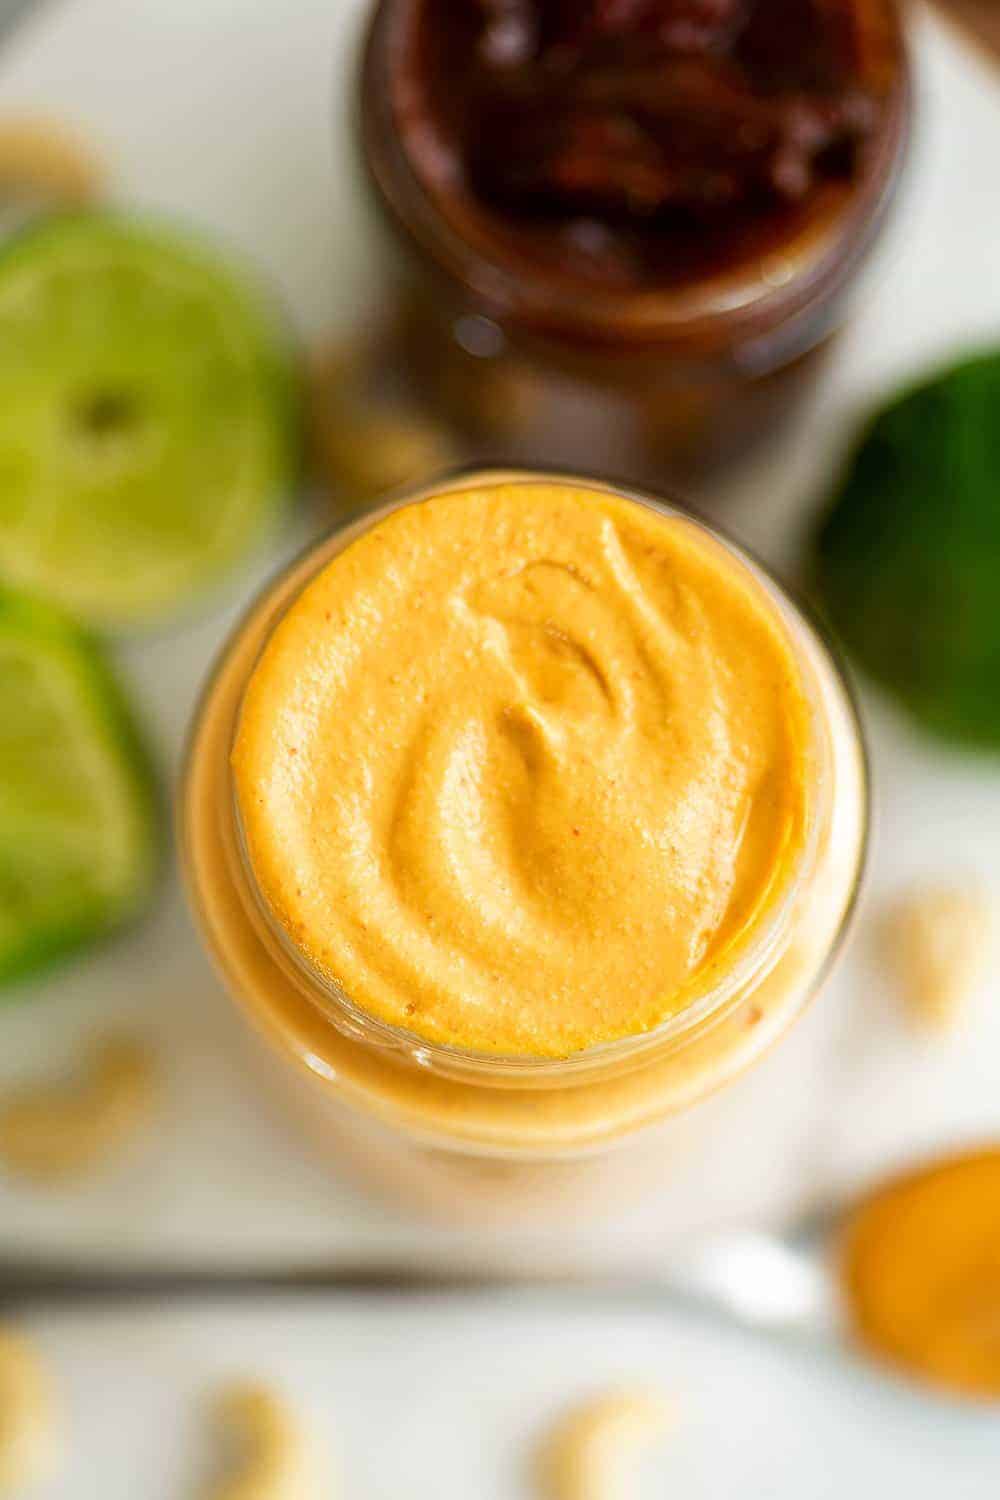 Vegan Chipotle Mayo - The Perfect Creamy Spicy Sauce | Bites of Wellness